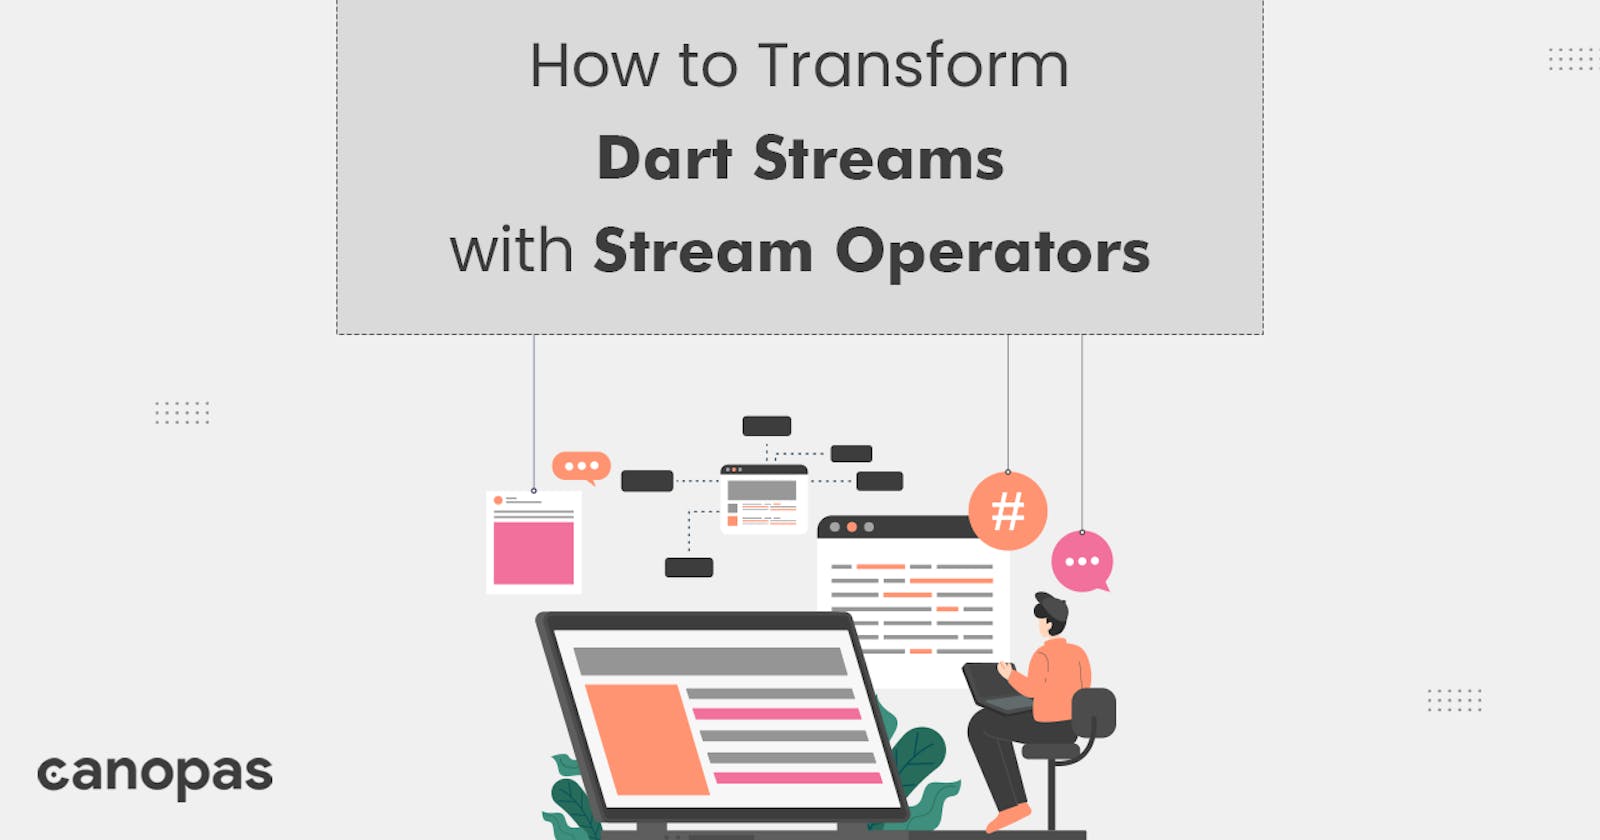 How to Transform Dart Streams: A Basic Guide to Stream Operators